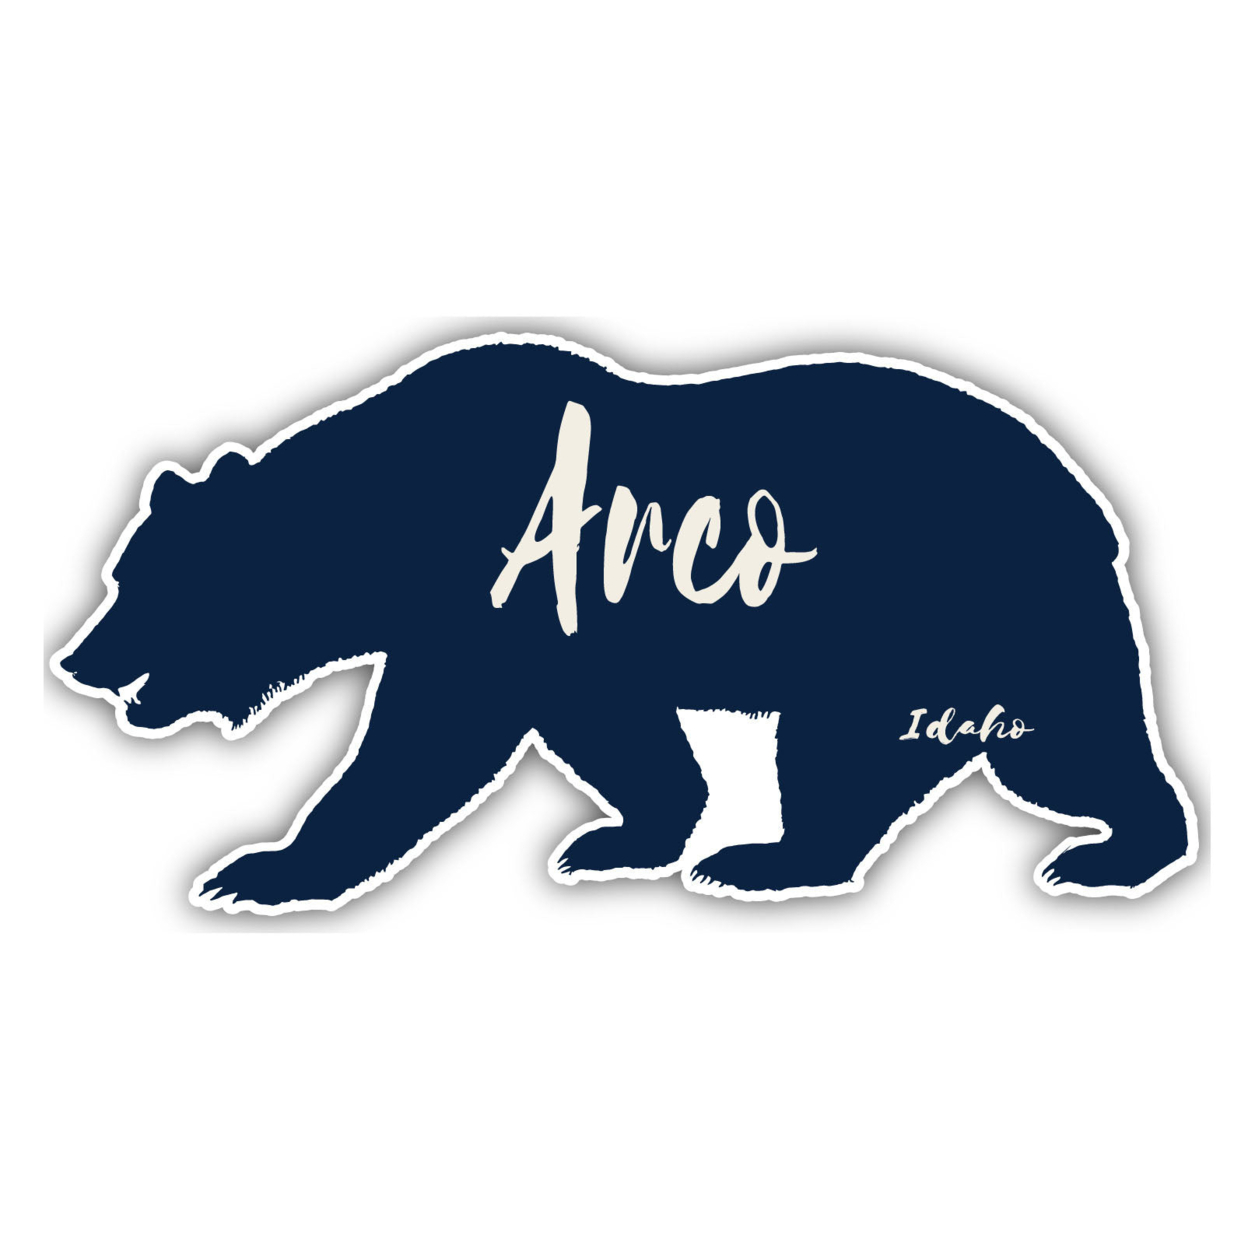 Arco Idaho Souvenir Decorative Stickers (Choose Theme And Size) - Single Unit, 2-Inch, Bear